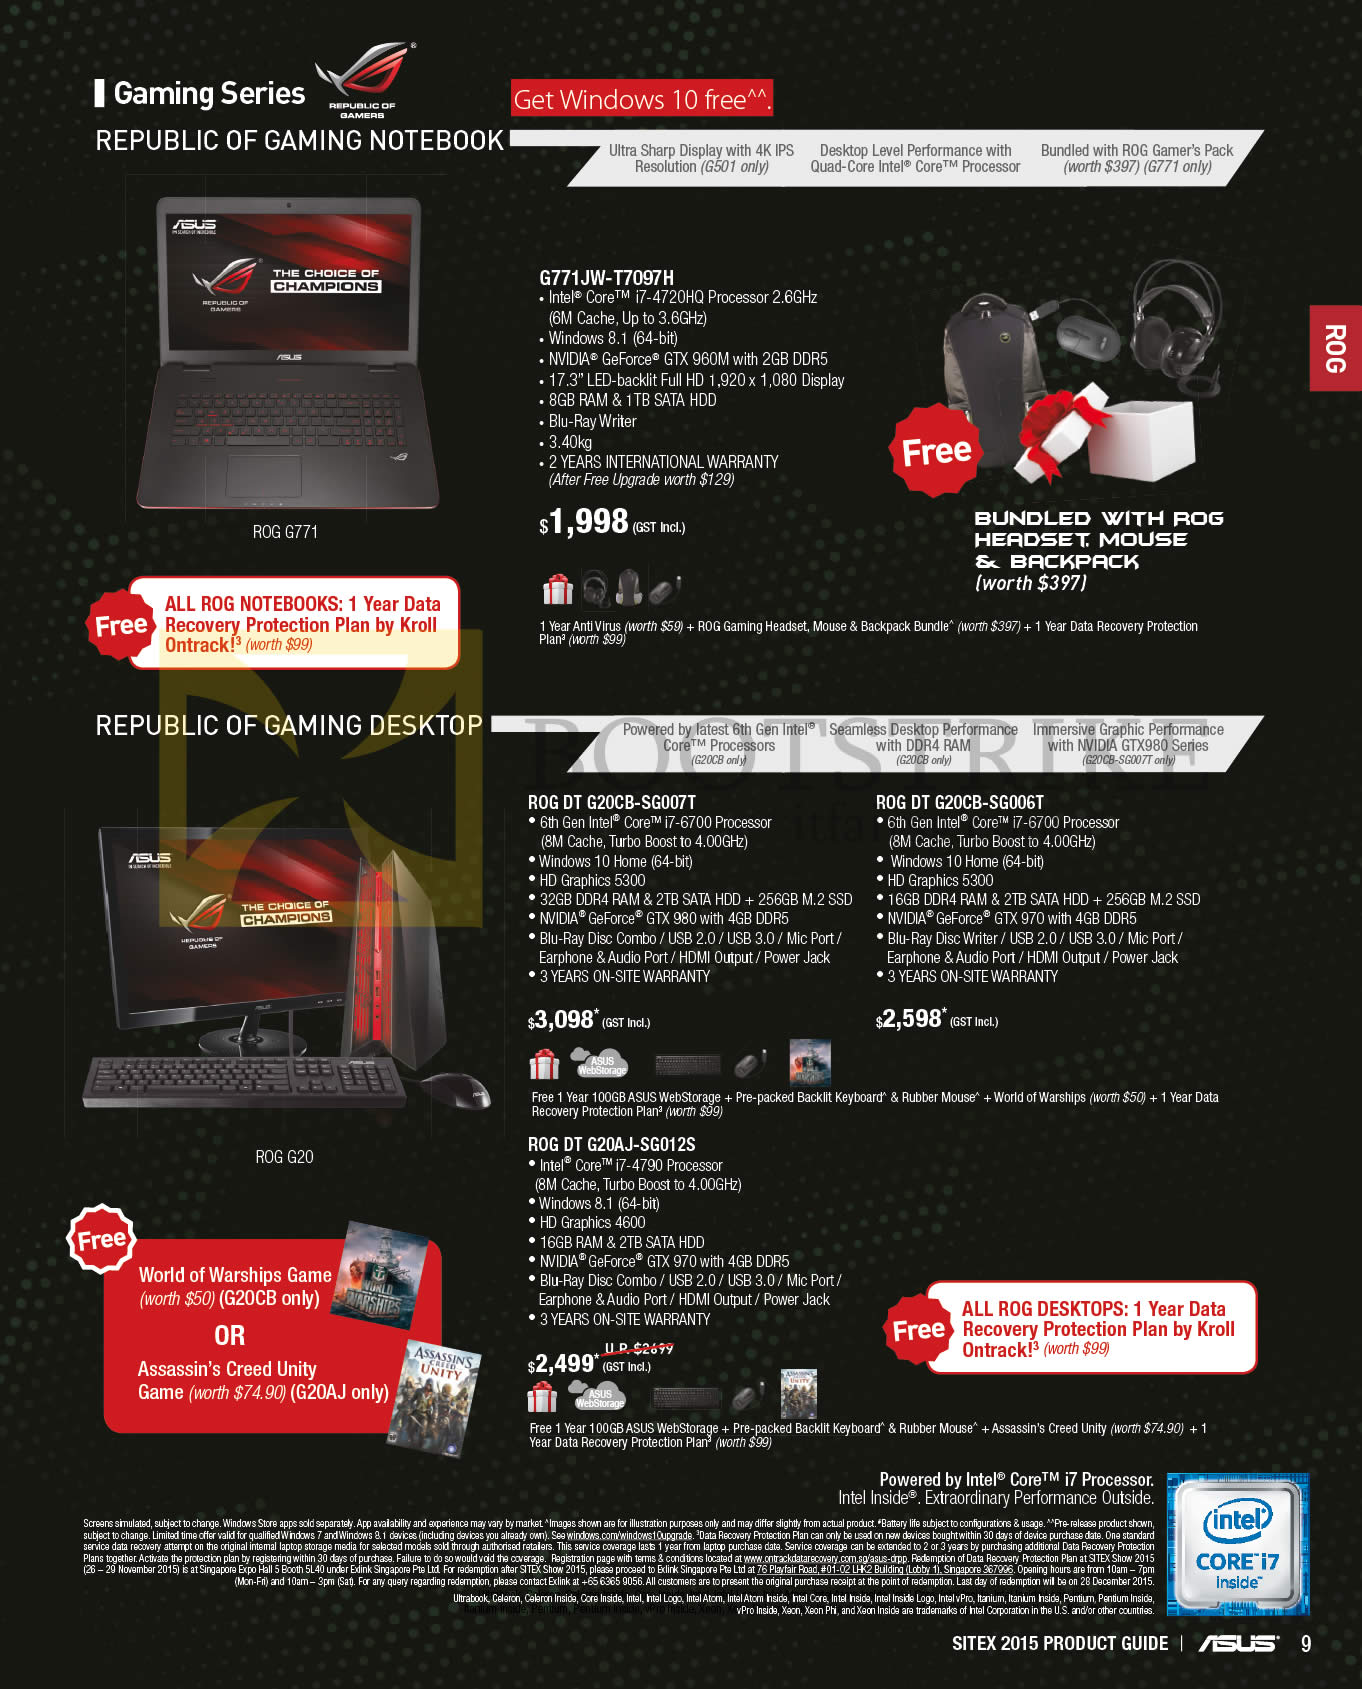 SITEX 2015 price list image brochure of ASUS Notebooks ROG, Desktop PCs, G771JW-T7097H, ROG DT G20CB-SG007T, ROG DT G20CB-SG006T, ROG DT G20AJ-SG012S